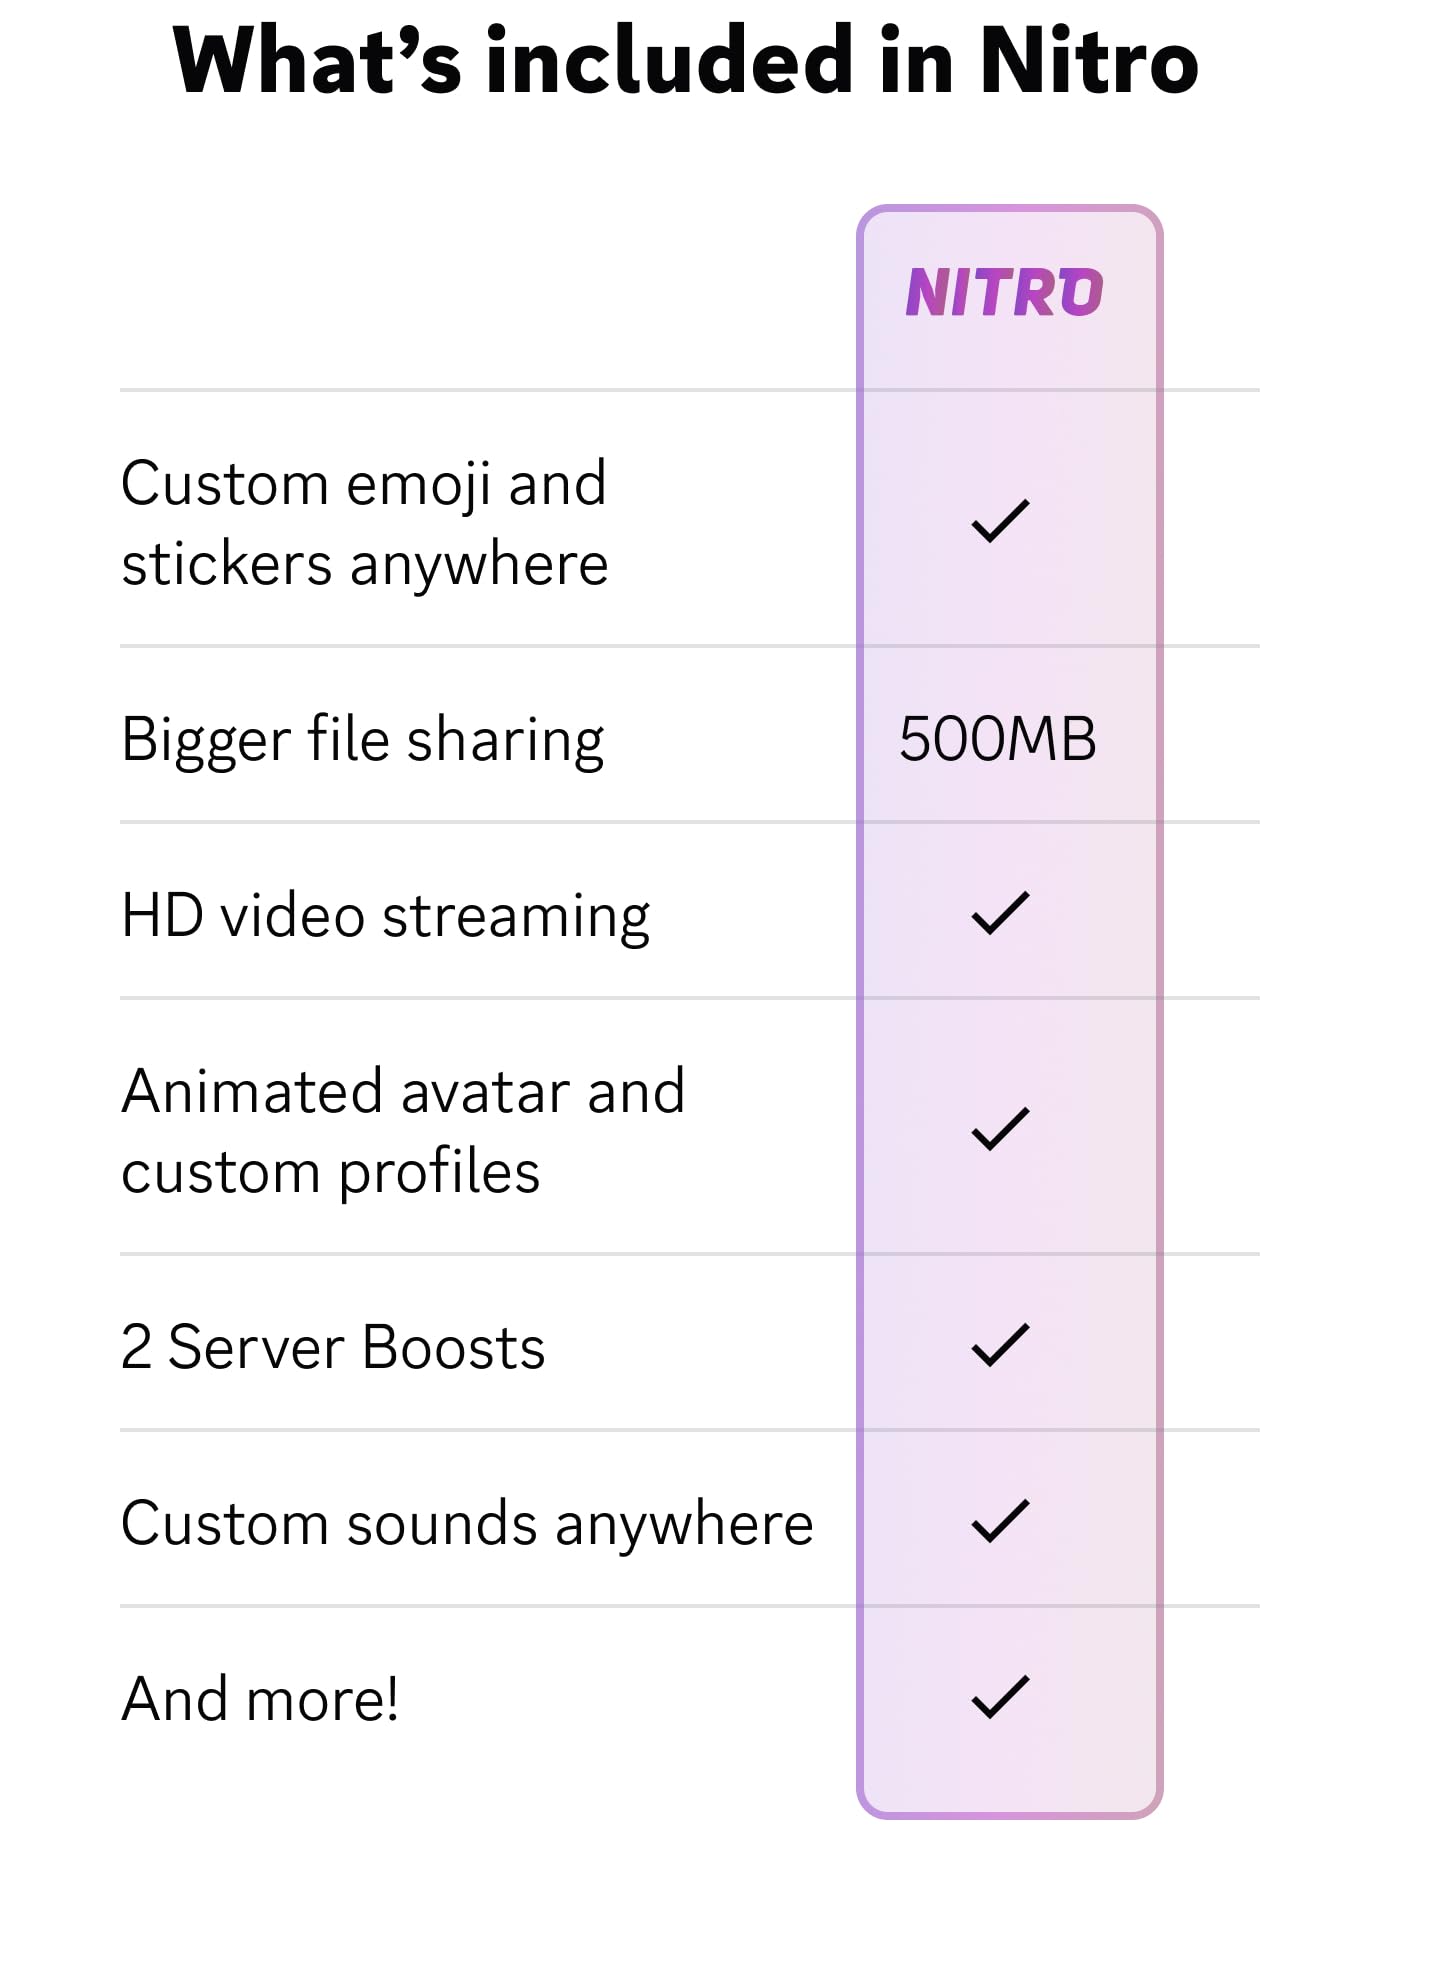 Discord Nitro 3-Month Subscription Gift Card [Digital Code]